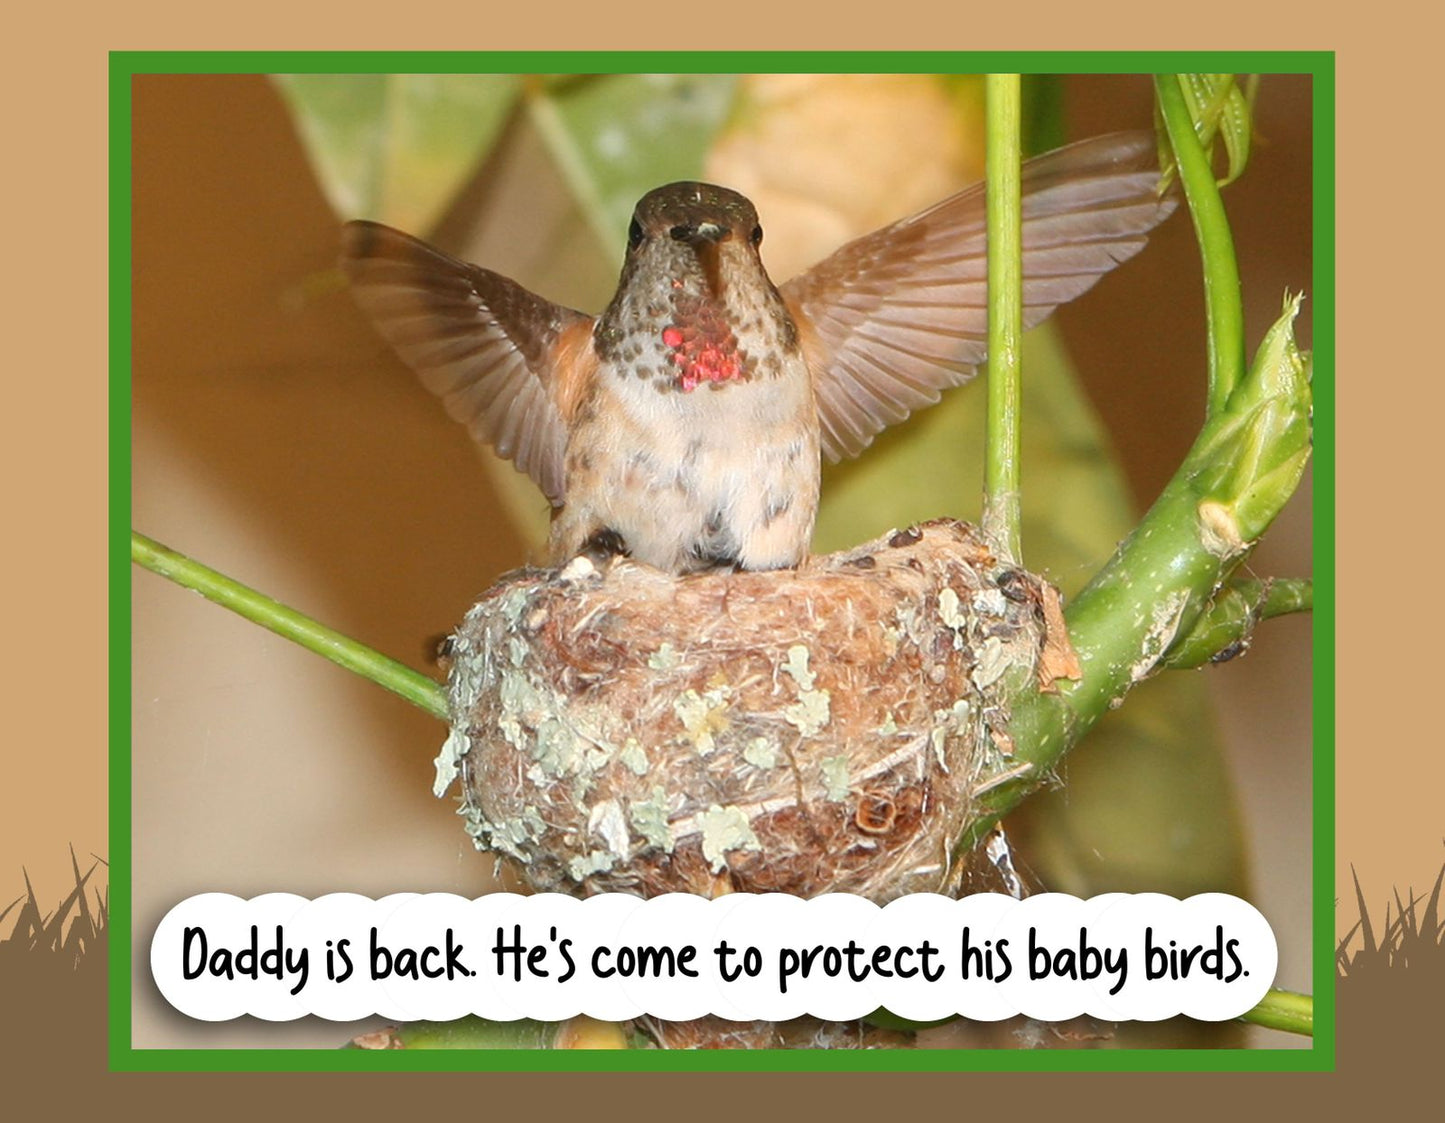 "Welcome, Baby Hummingbirds" Children's Nature Book